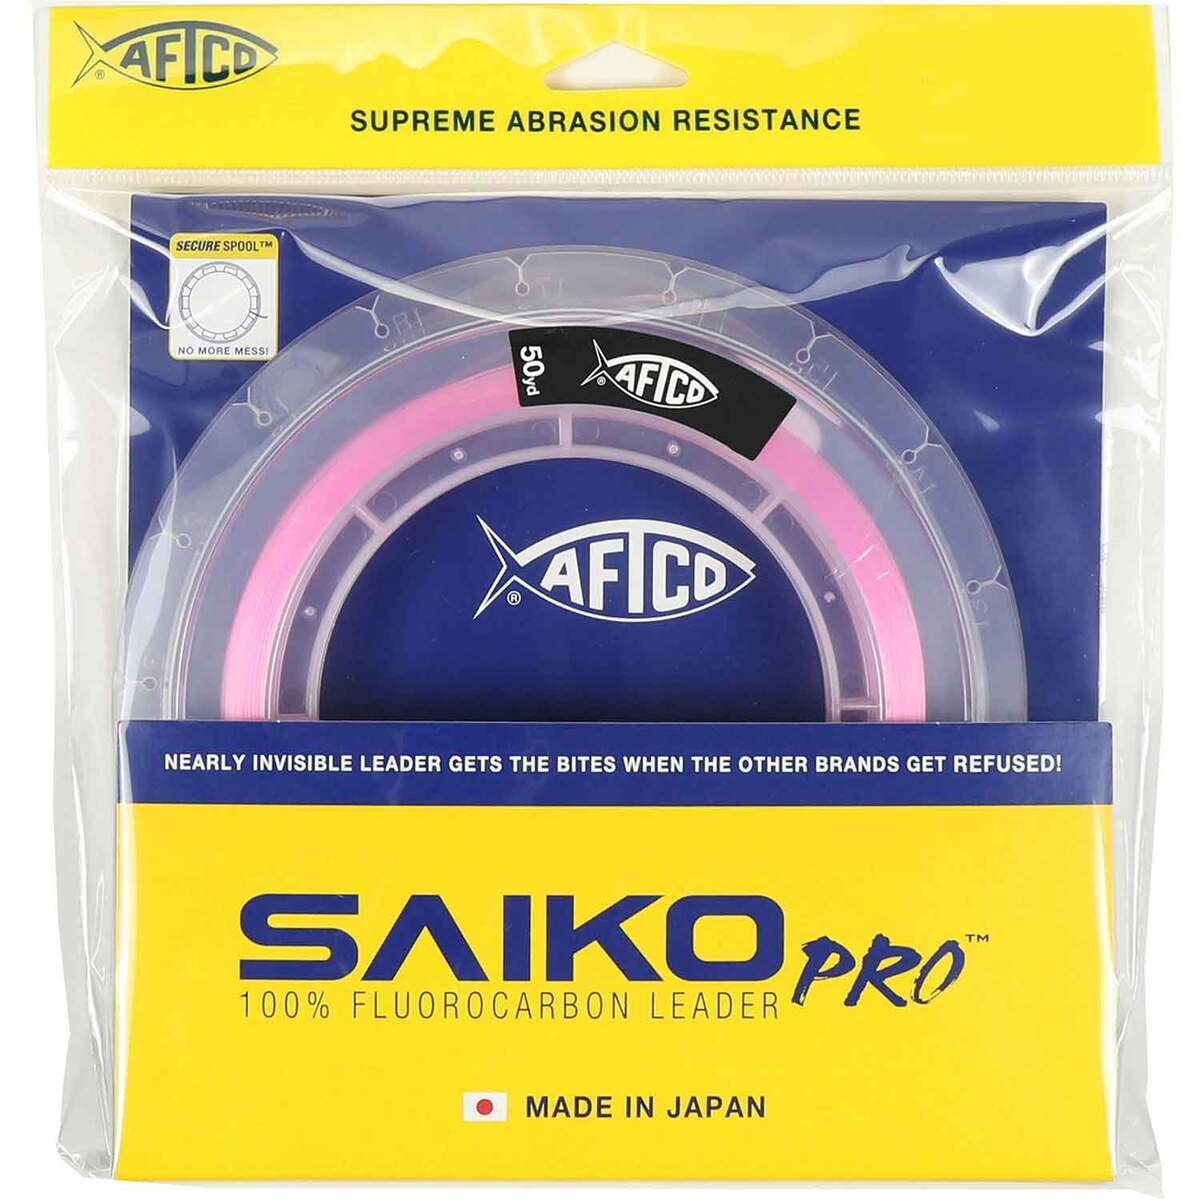 AFTCO Saiko Pro 100% Fluorocarbon Leader, 50 Yard / Pink / 60